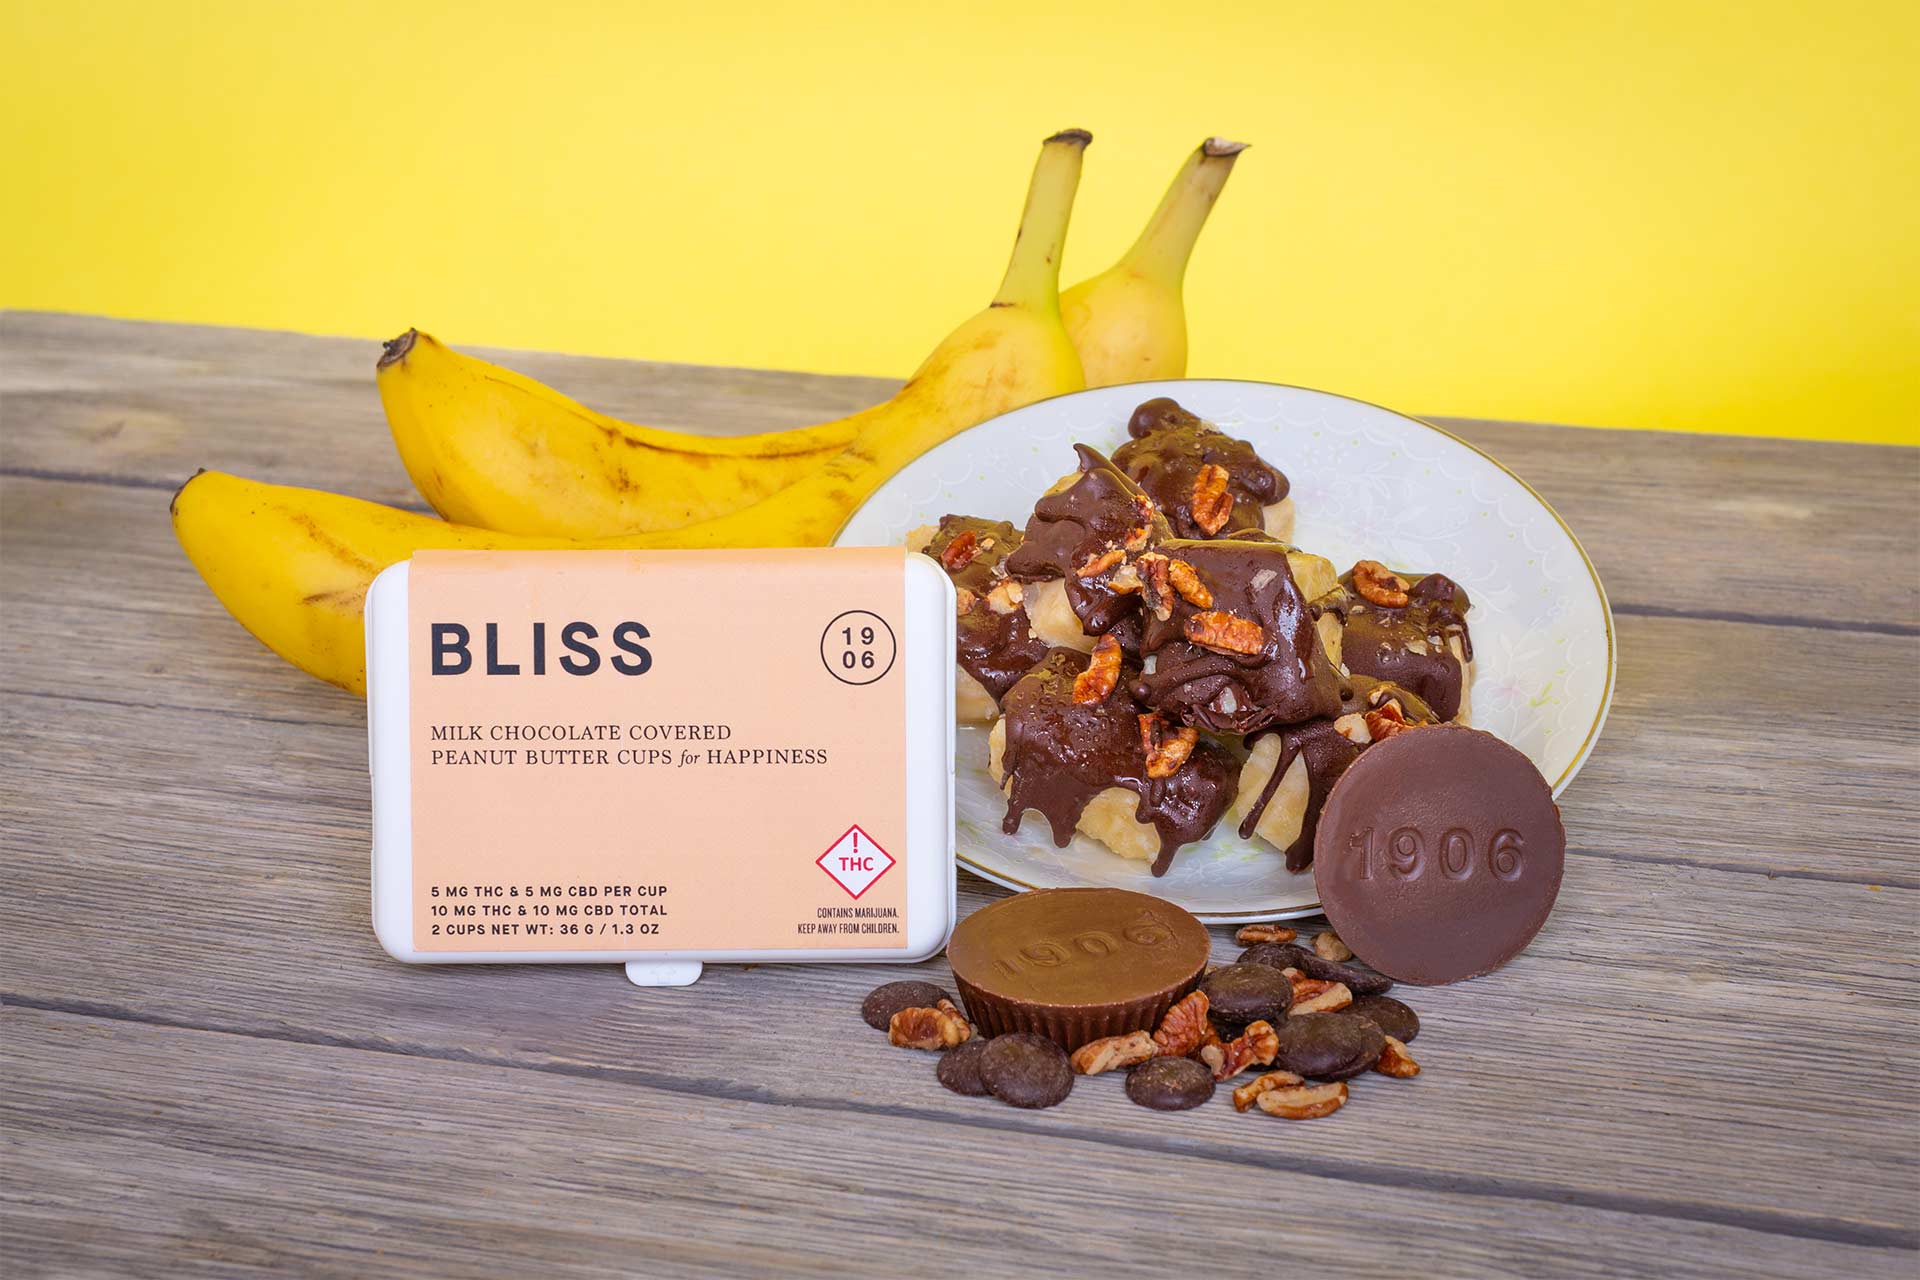 1906 Bliss Cups - Banana Chocolate Ice Cream Bites